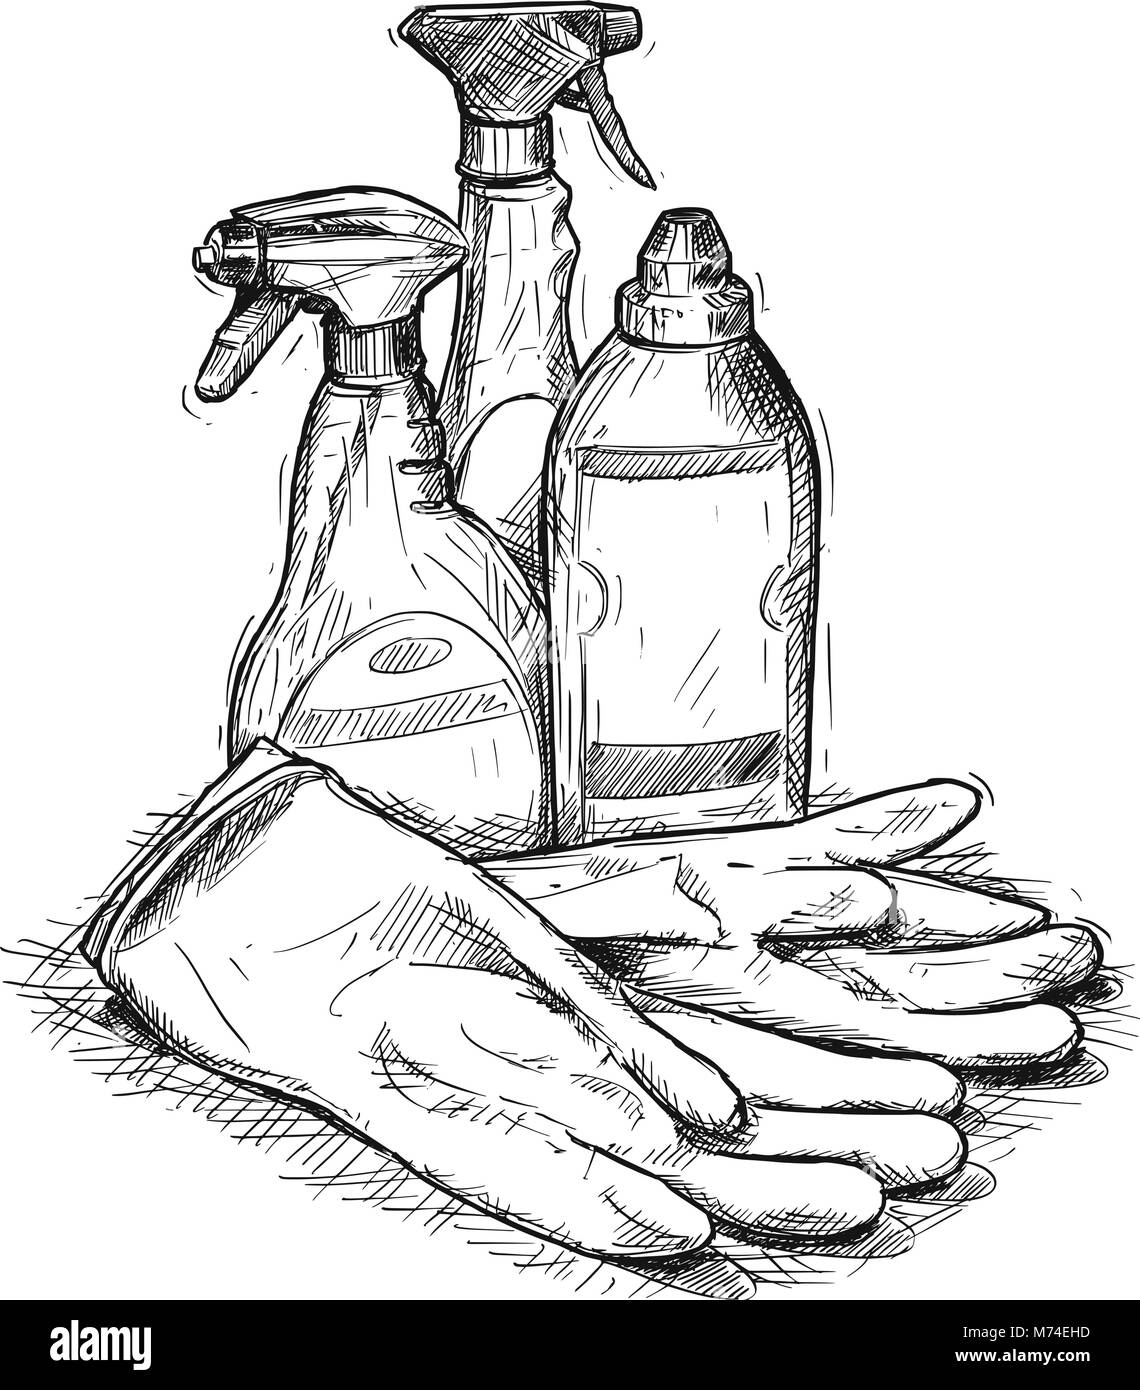 Free Vectors  Handwritten line drawing illustration set of household goods